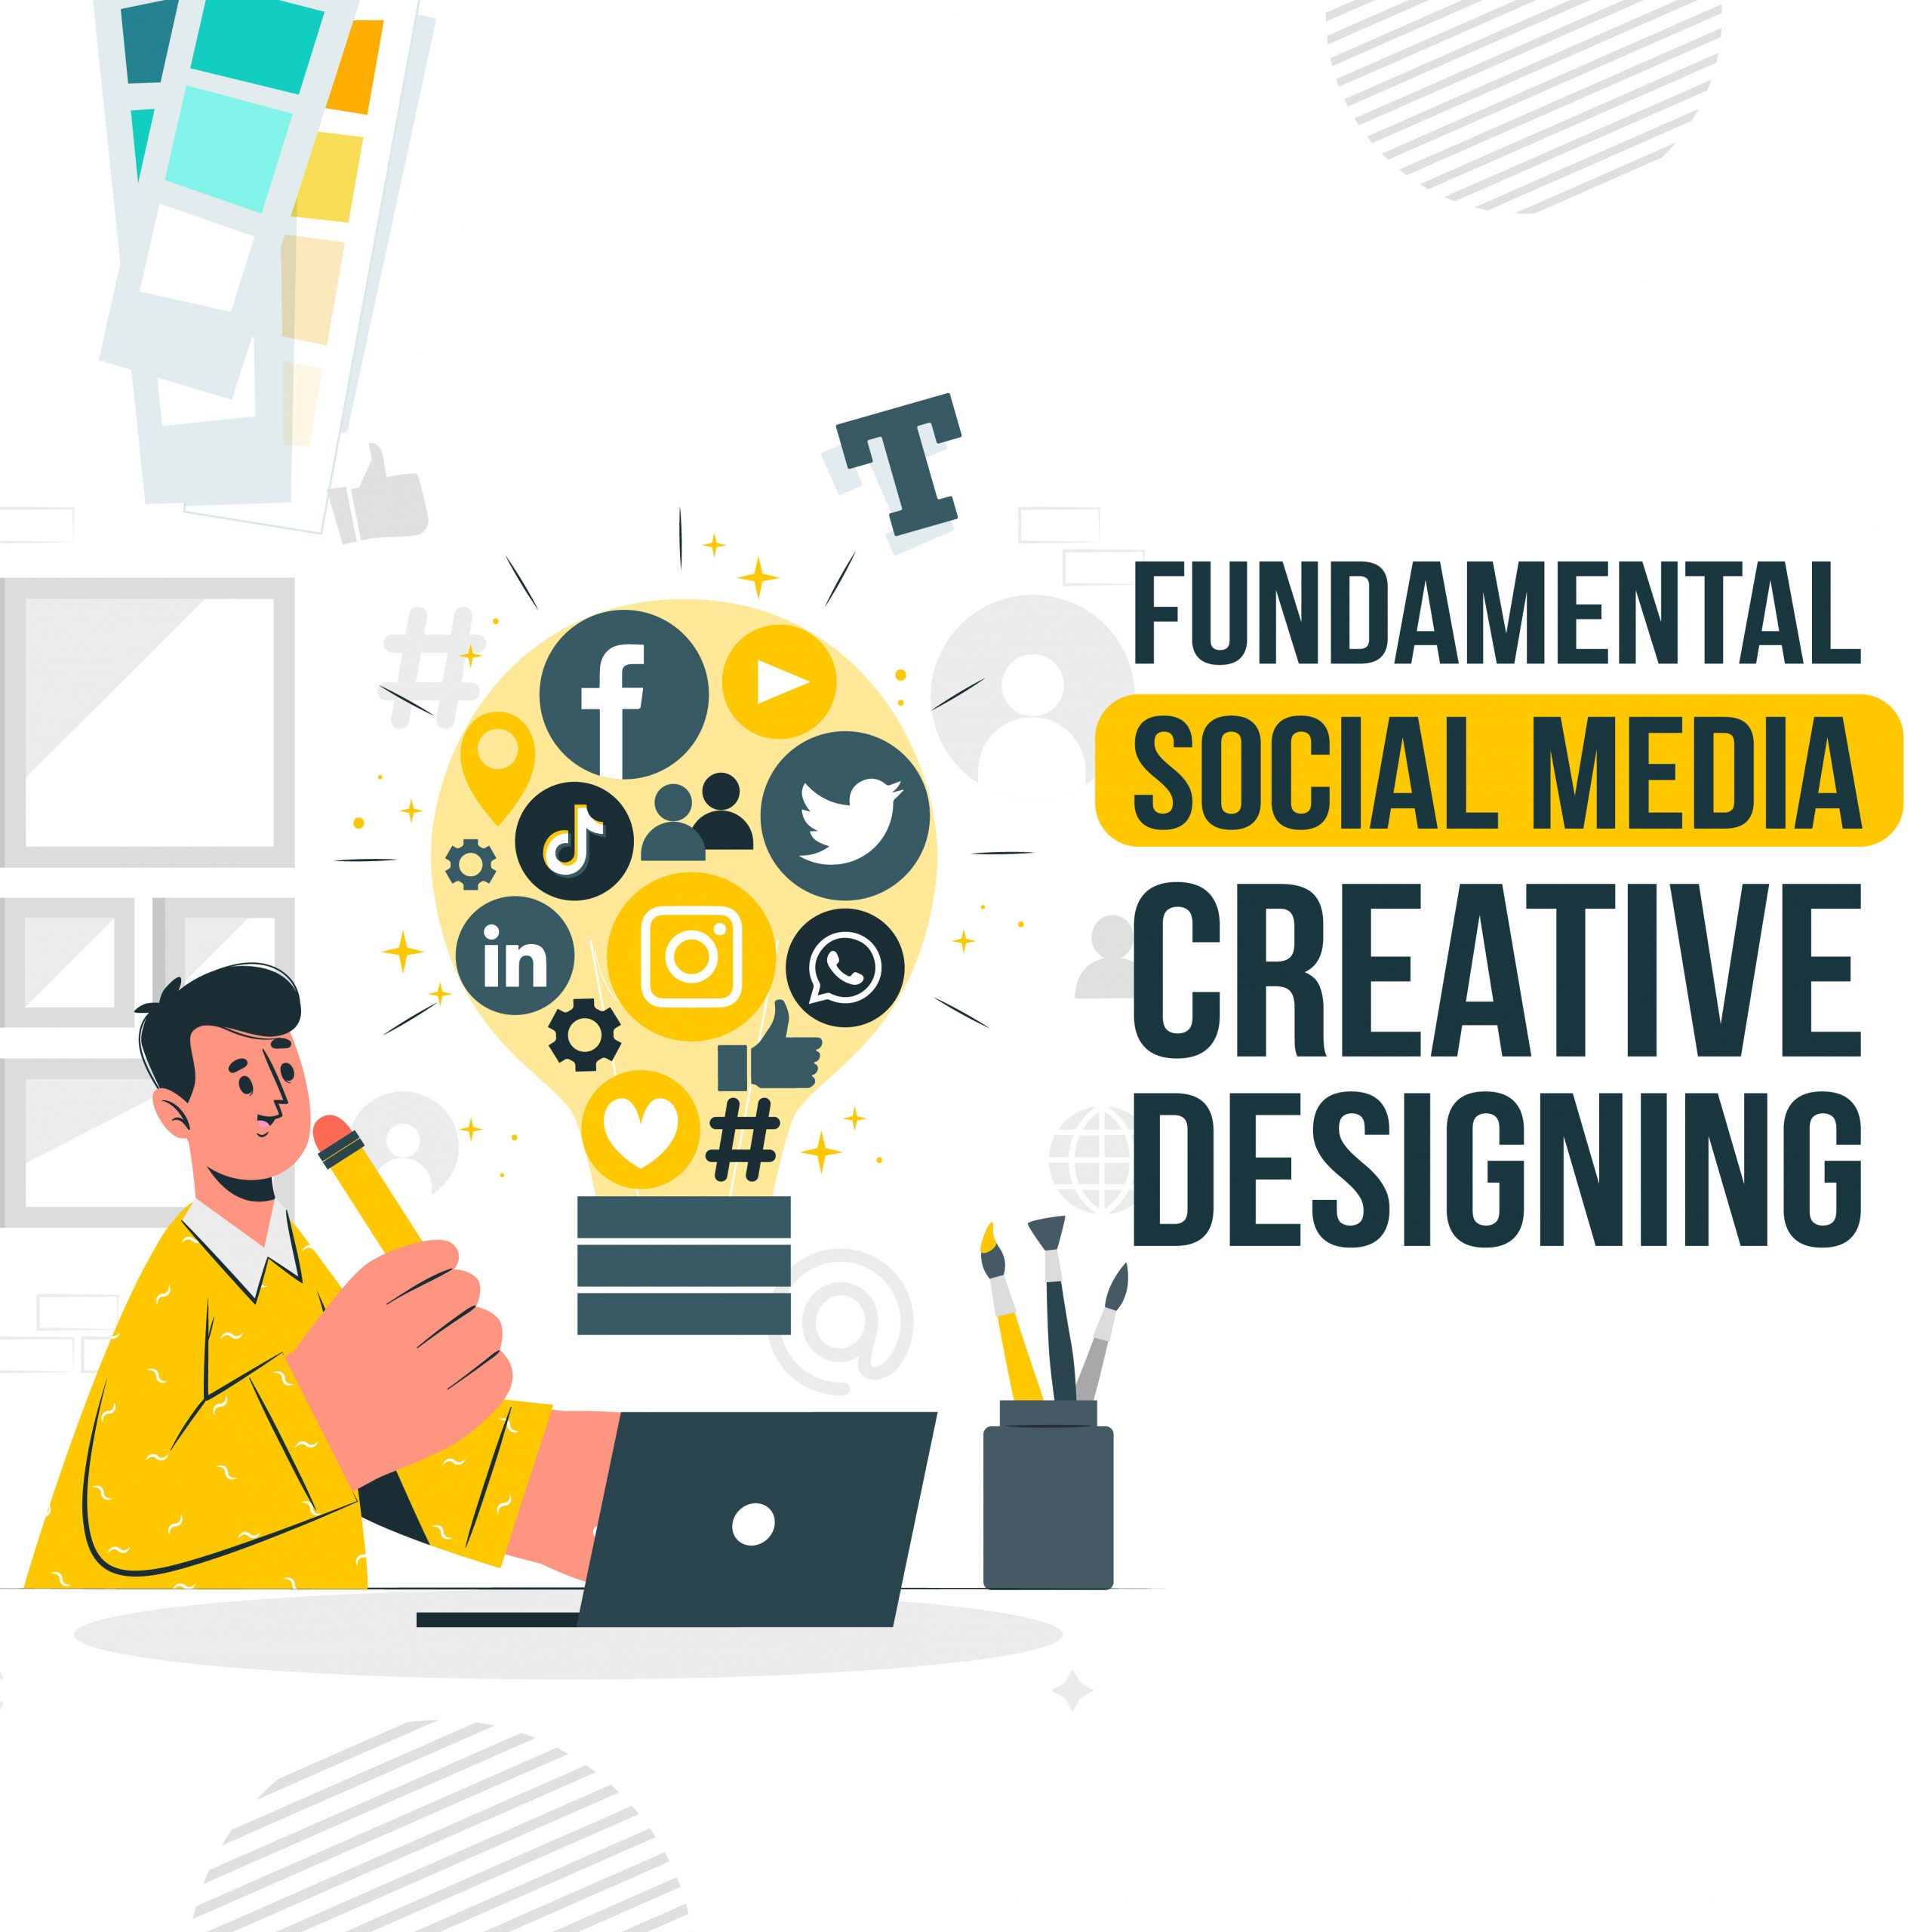 Fundamental Social Media Creative Designing